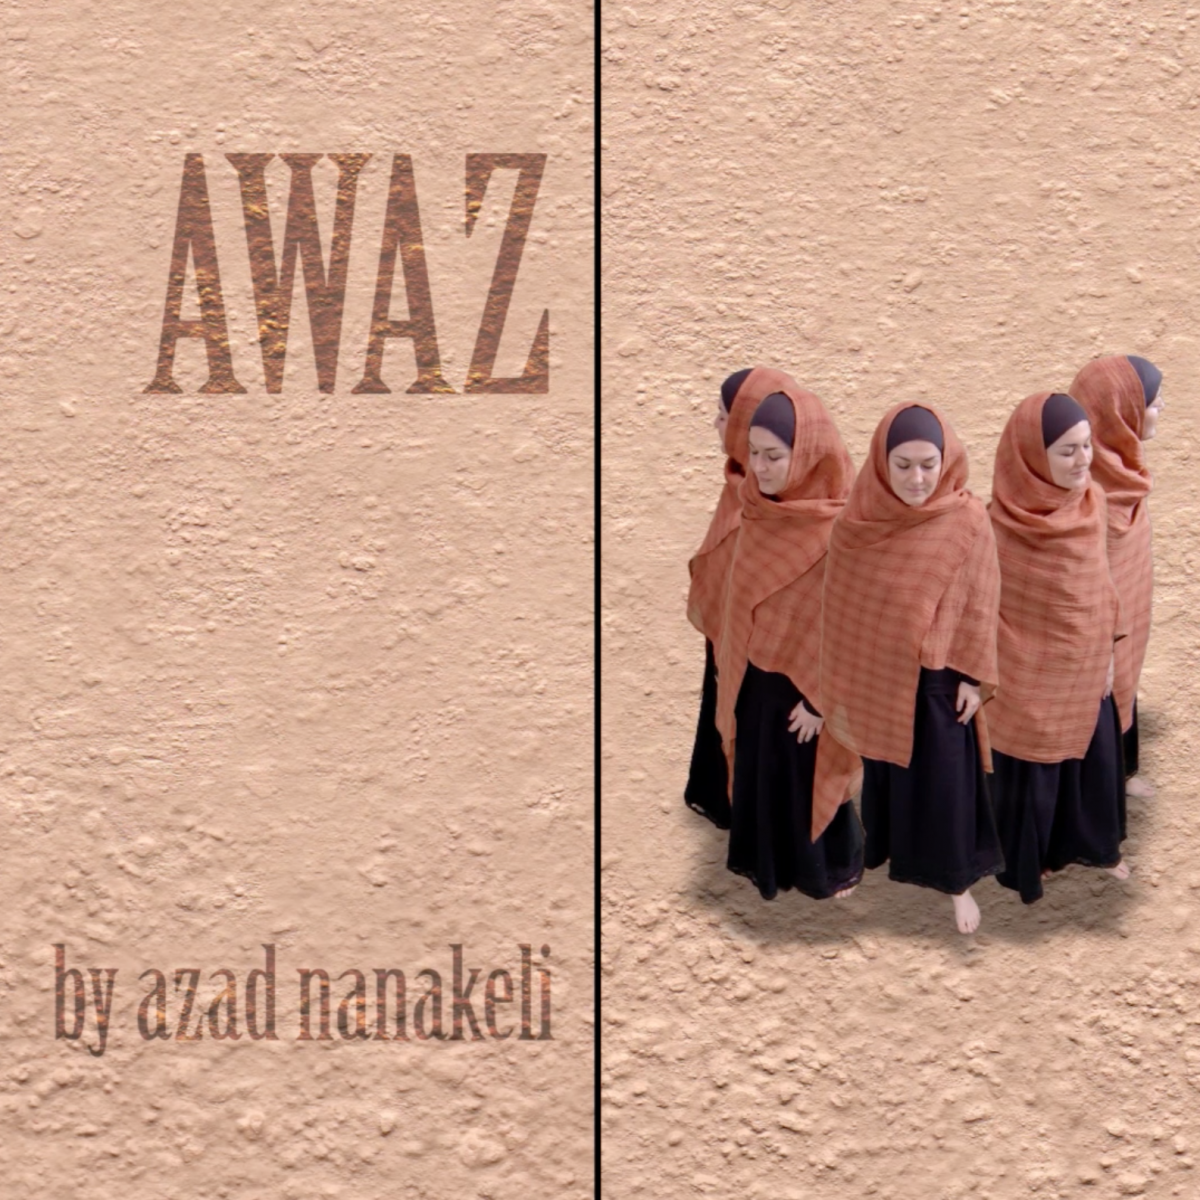 Azad Nanakeli